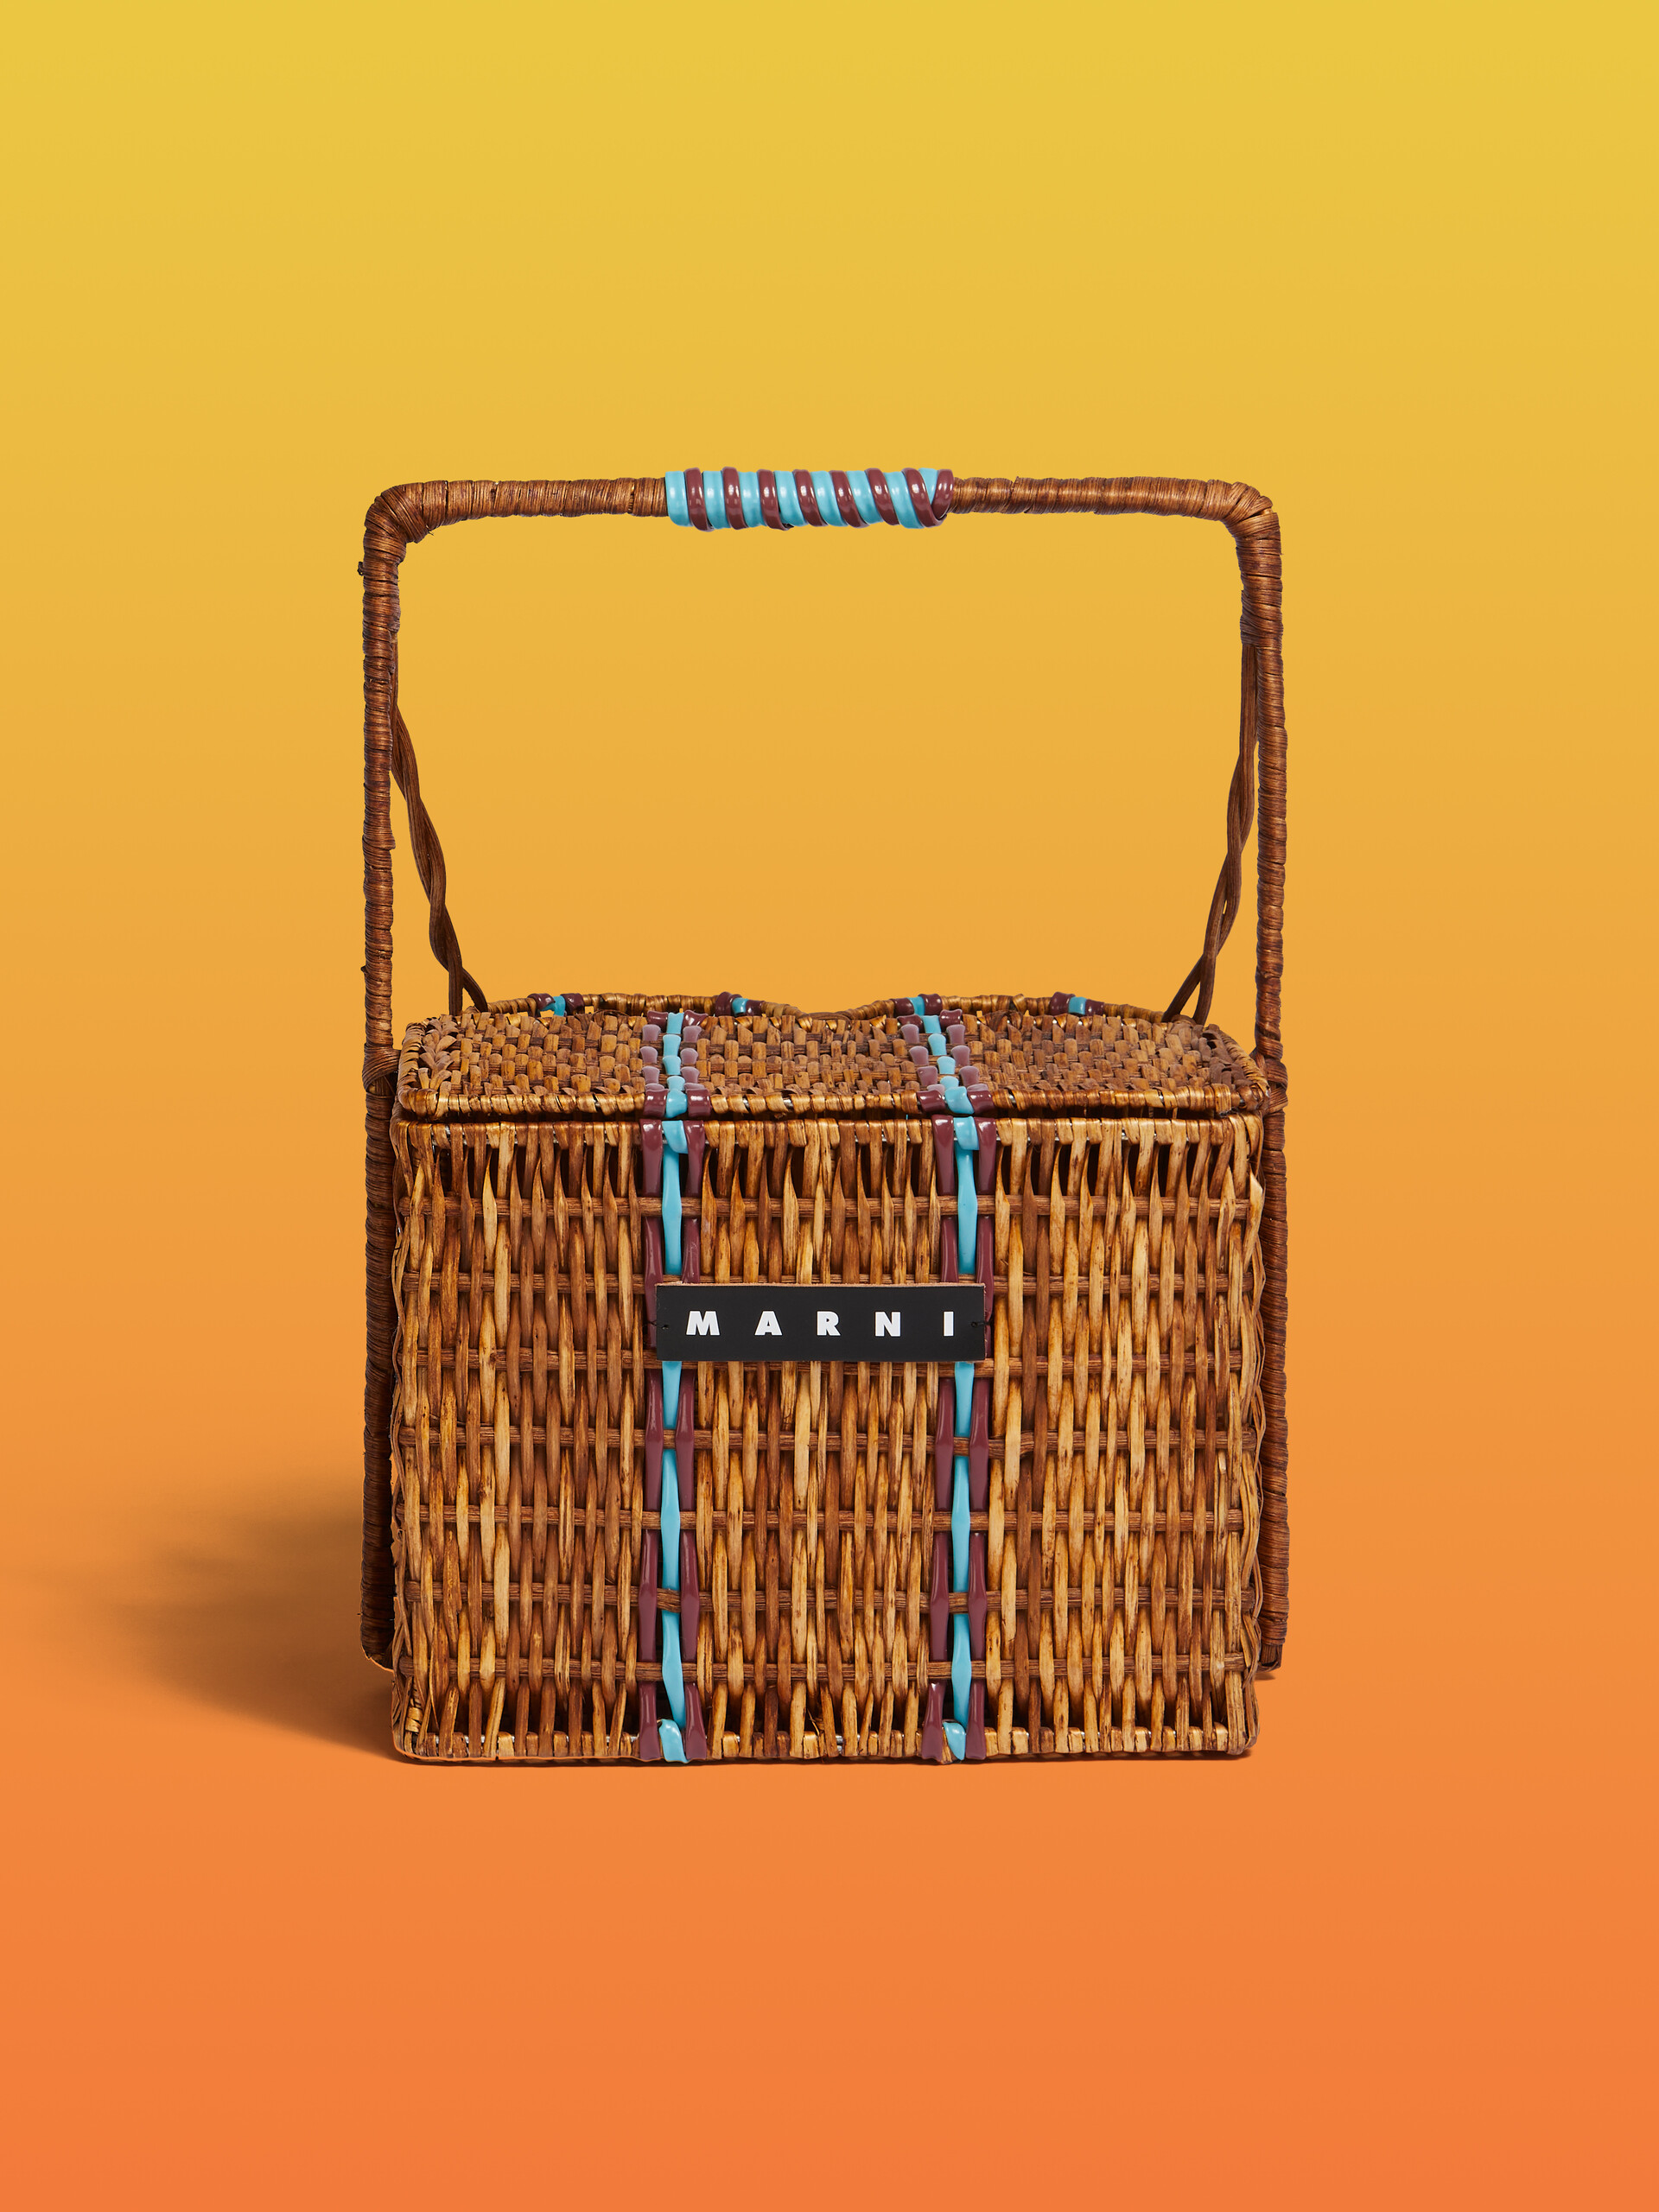 Brown natural fibre MARNI MARKET picnic basket - Accessories - Image 1